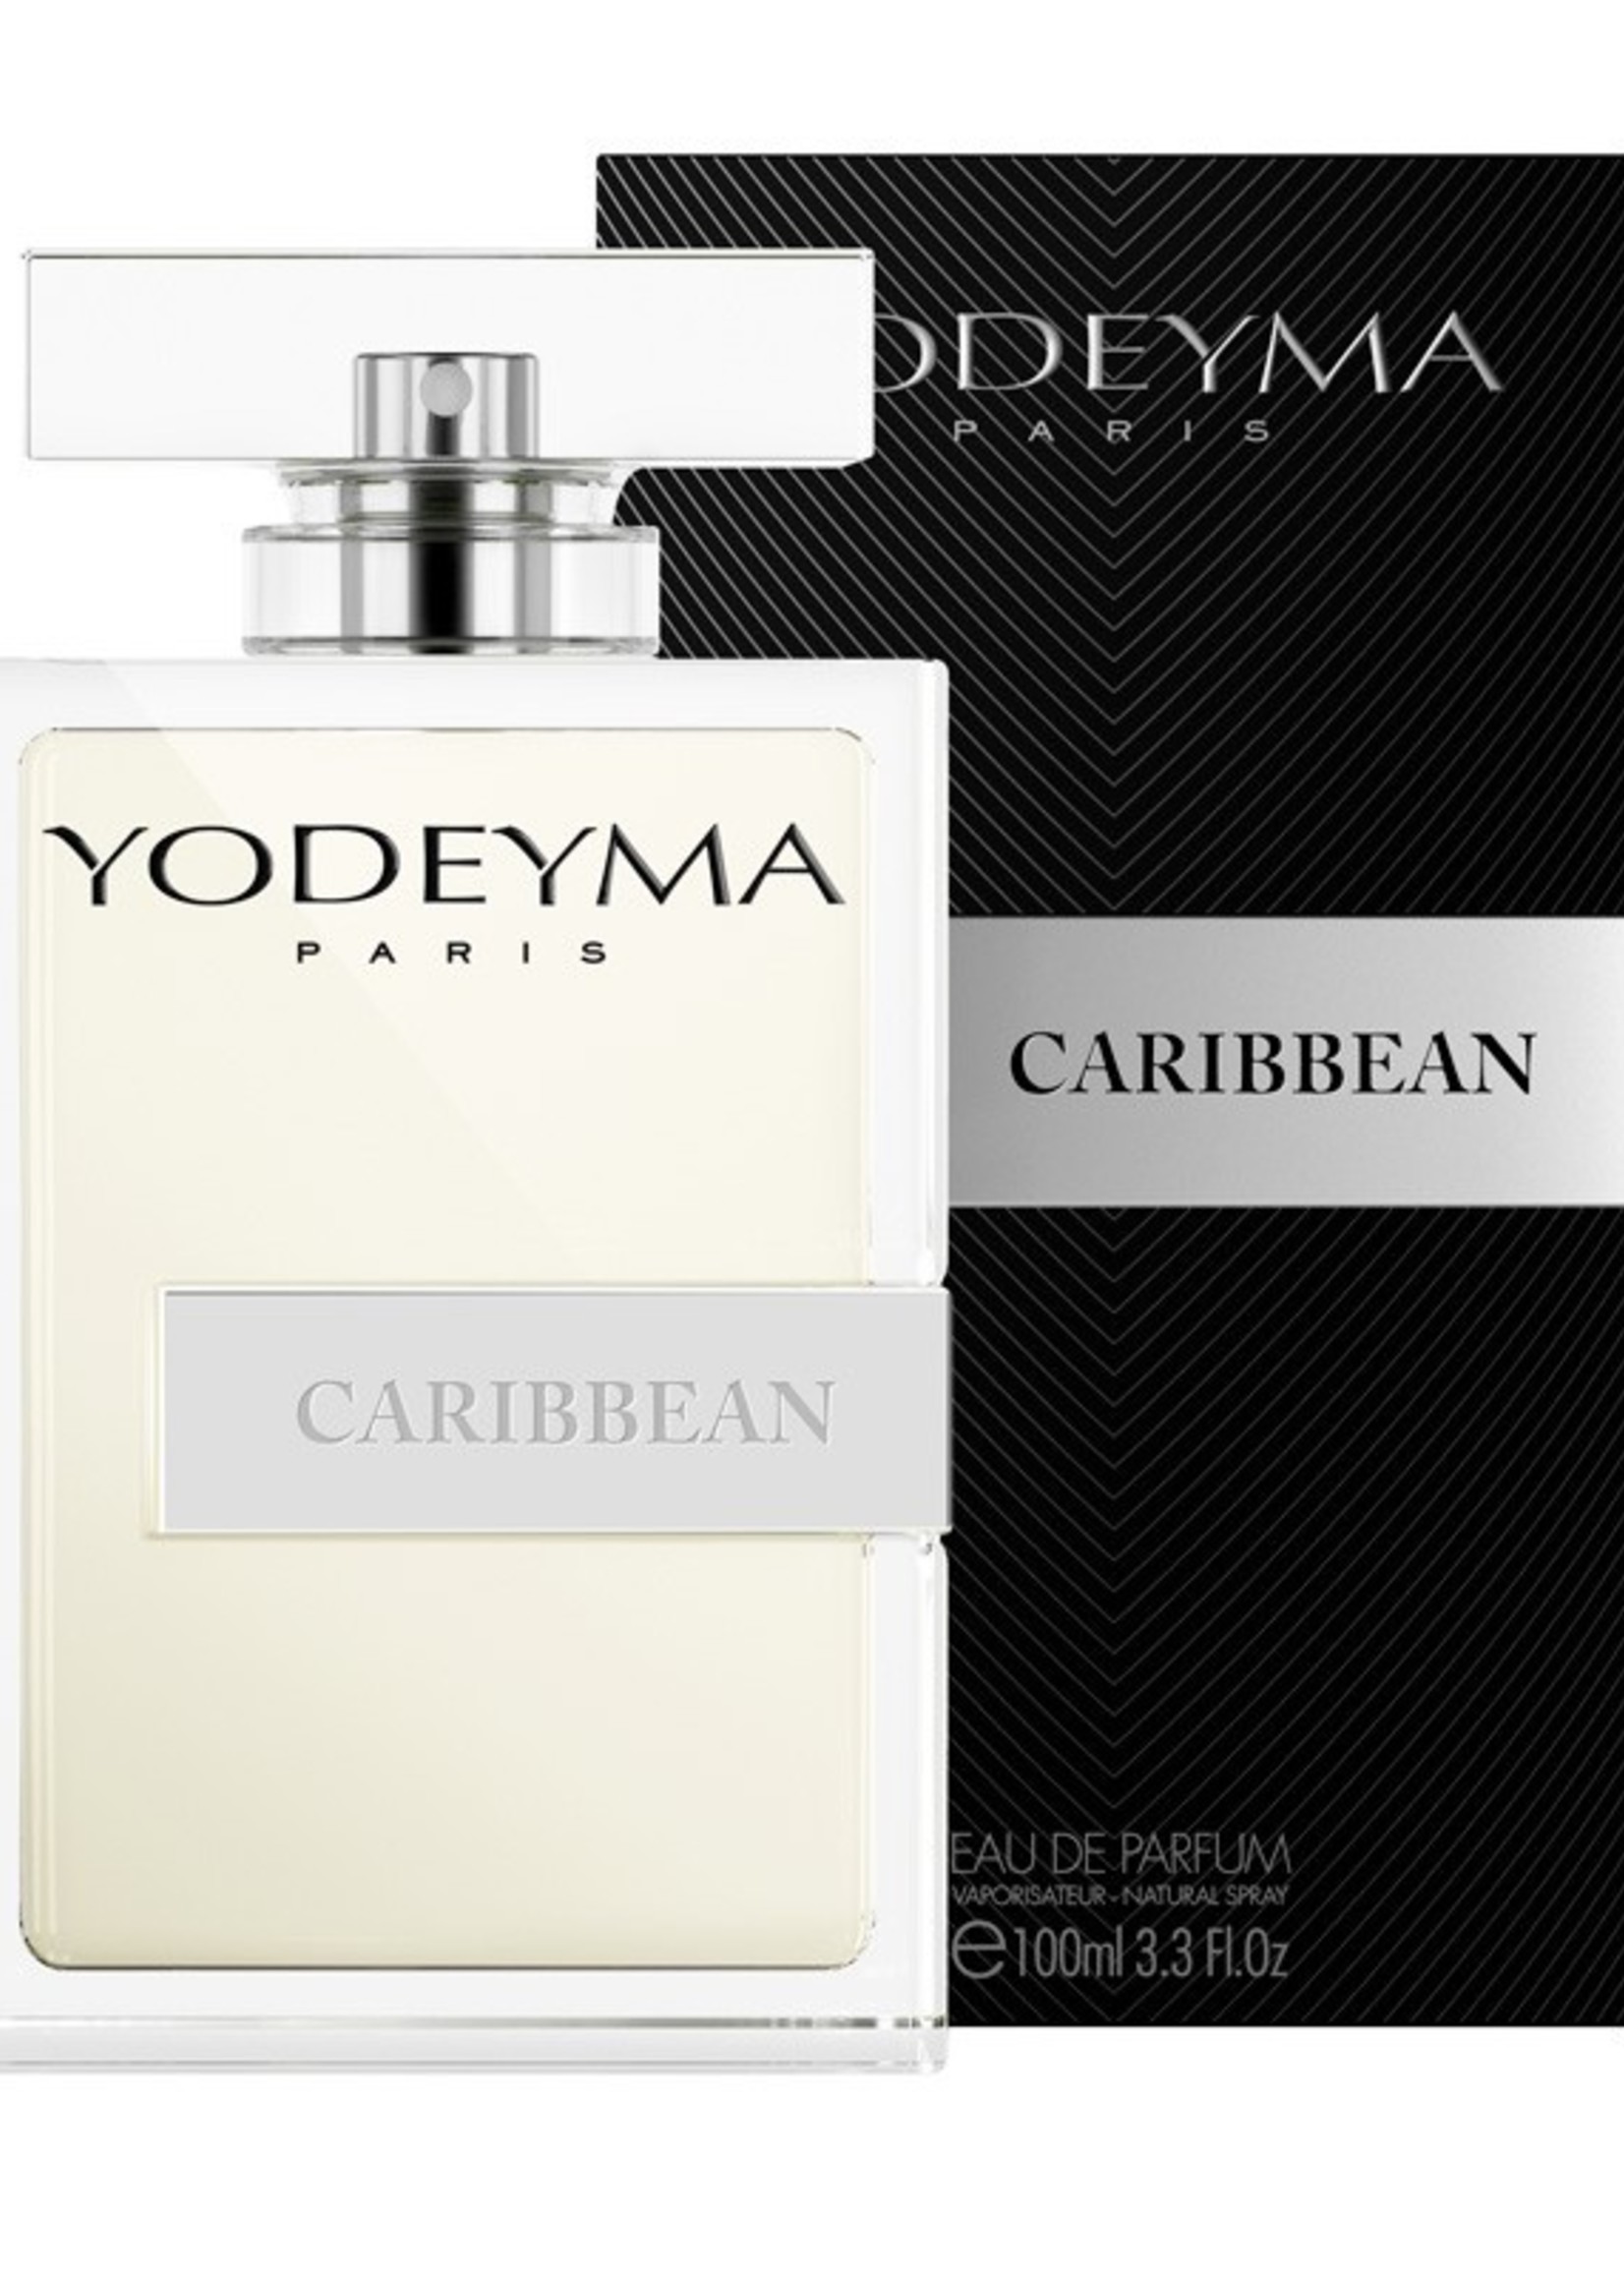 Yodeyma Parfums CARIBBEAN Eau de Parfum 100 ml.